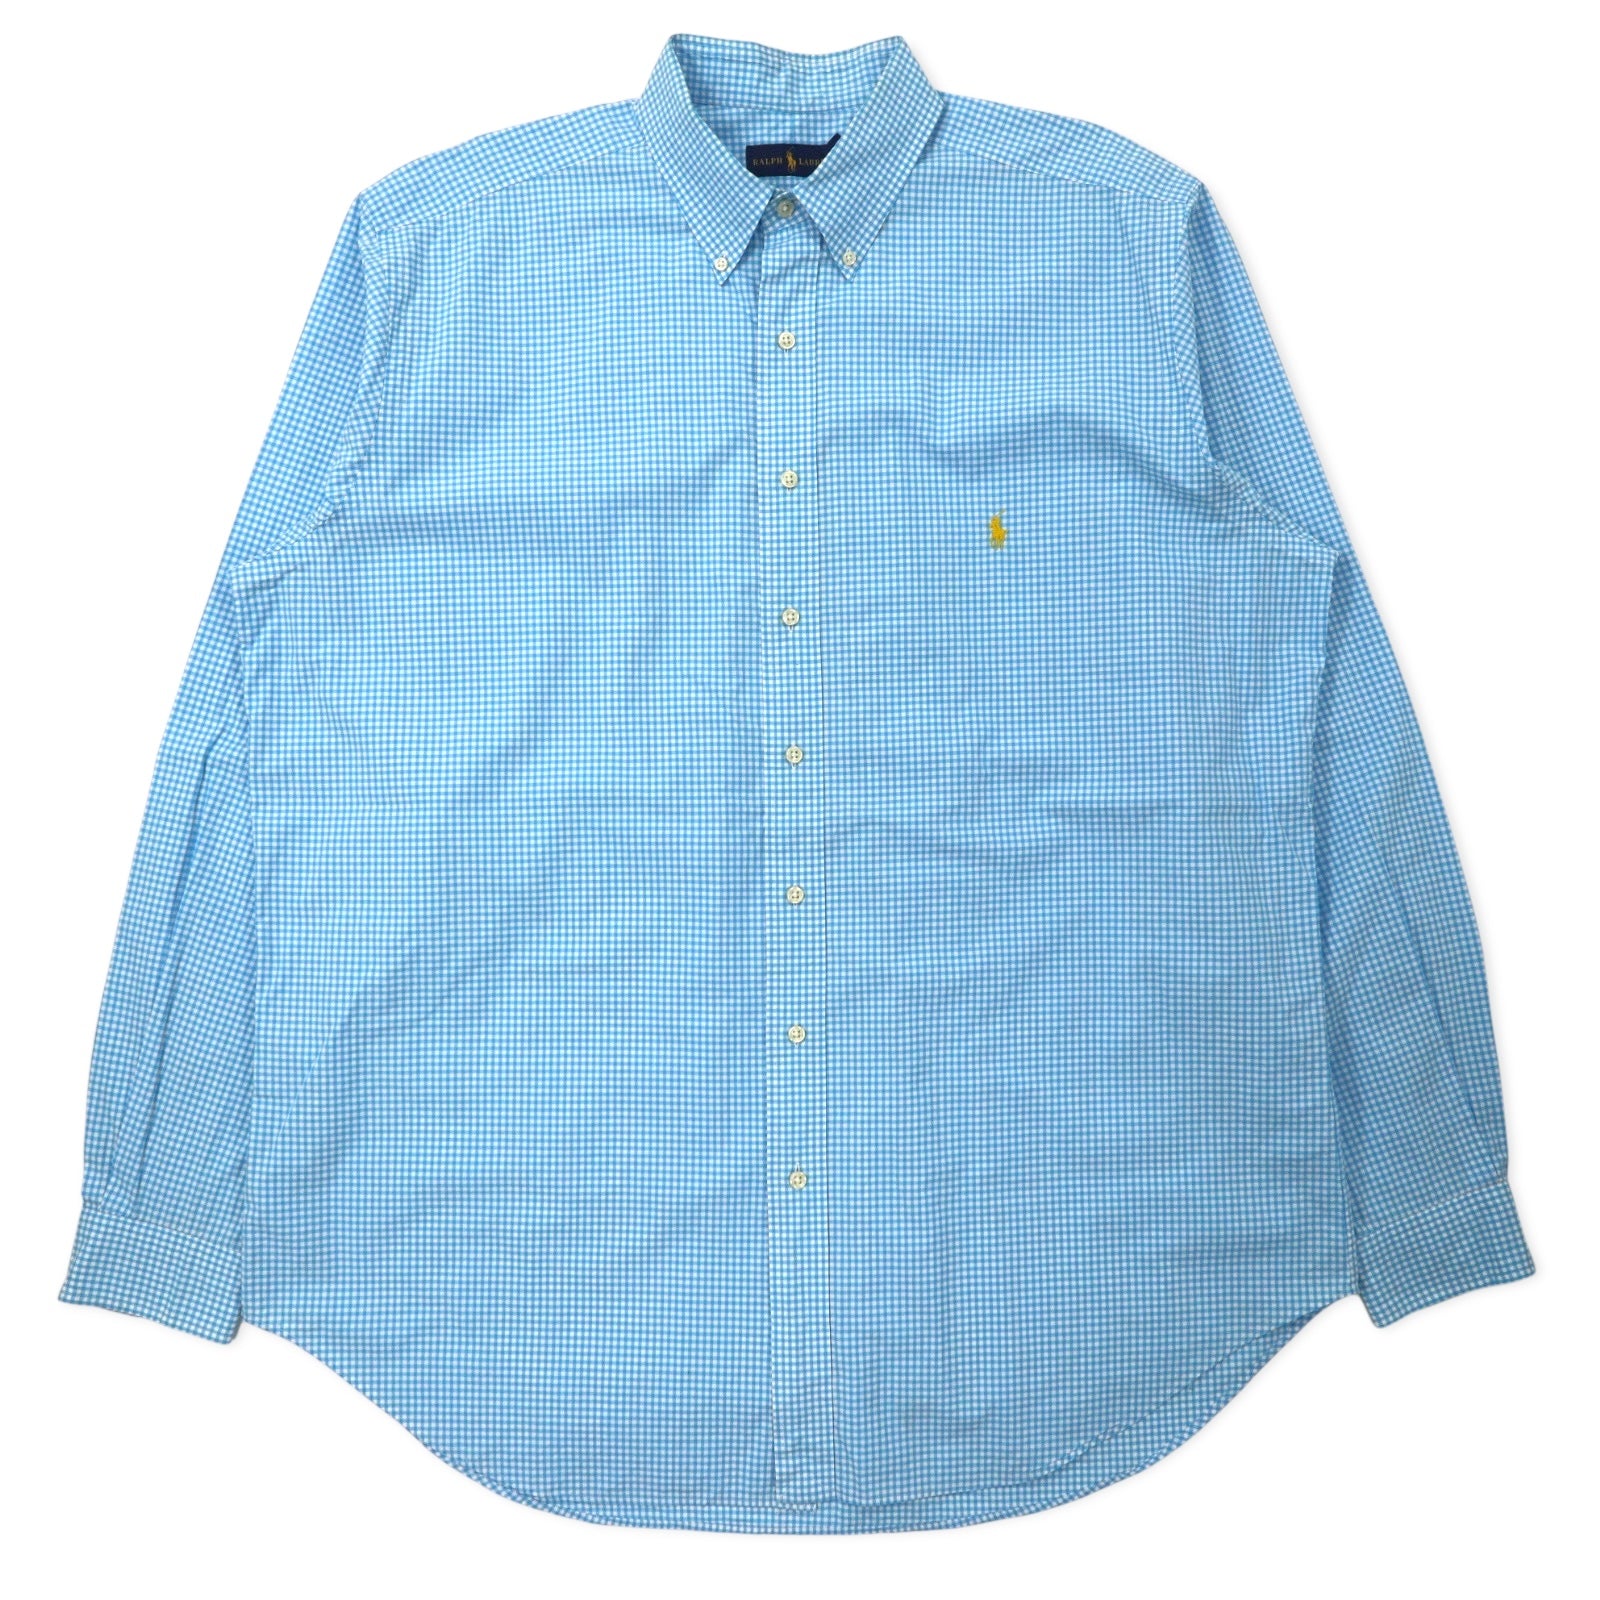 RALPH LAUREN ボタンダウンシャツ XLT TALL ブルー ギンガムチェック 